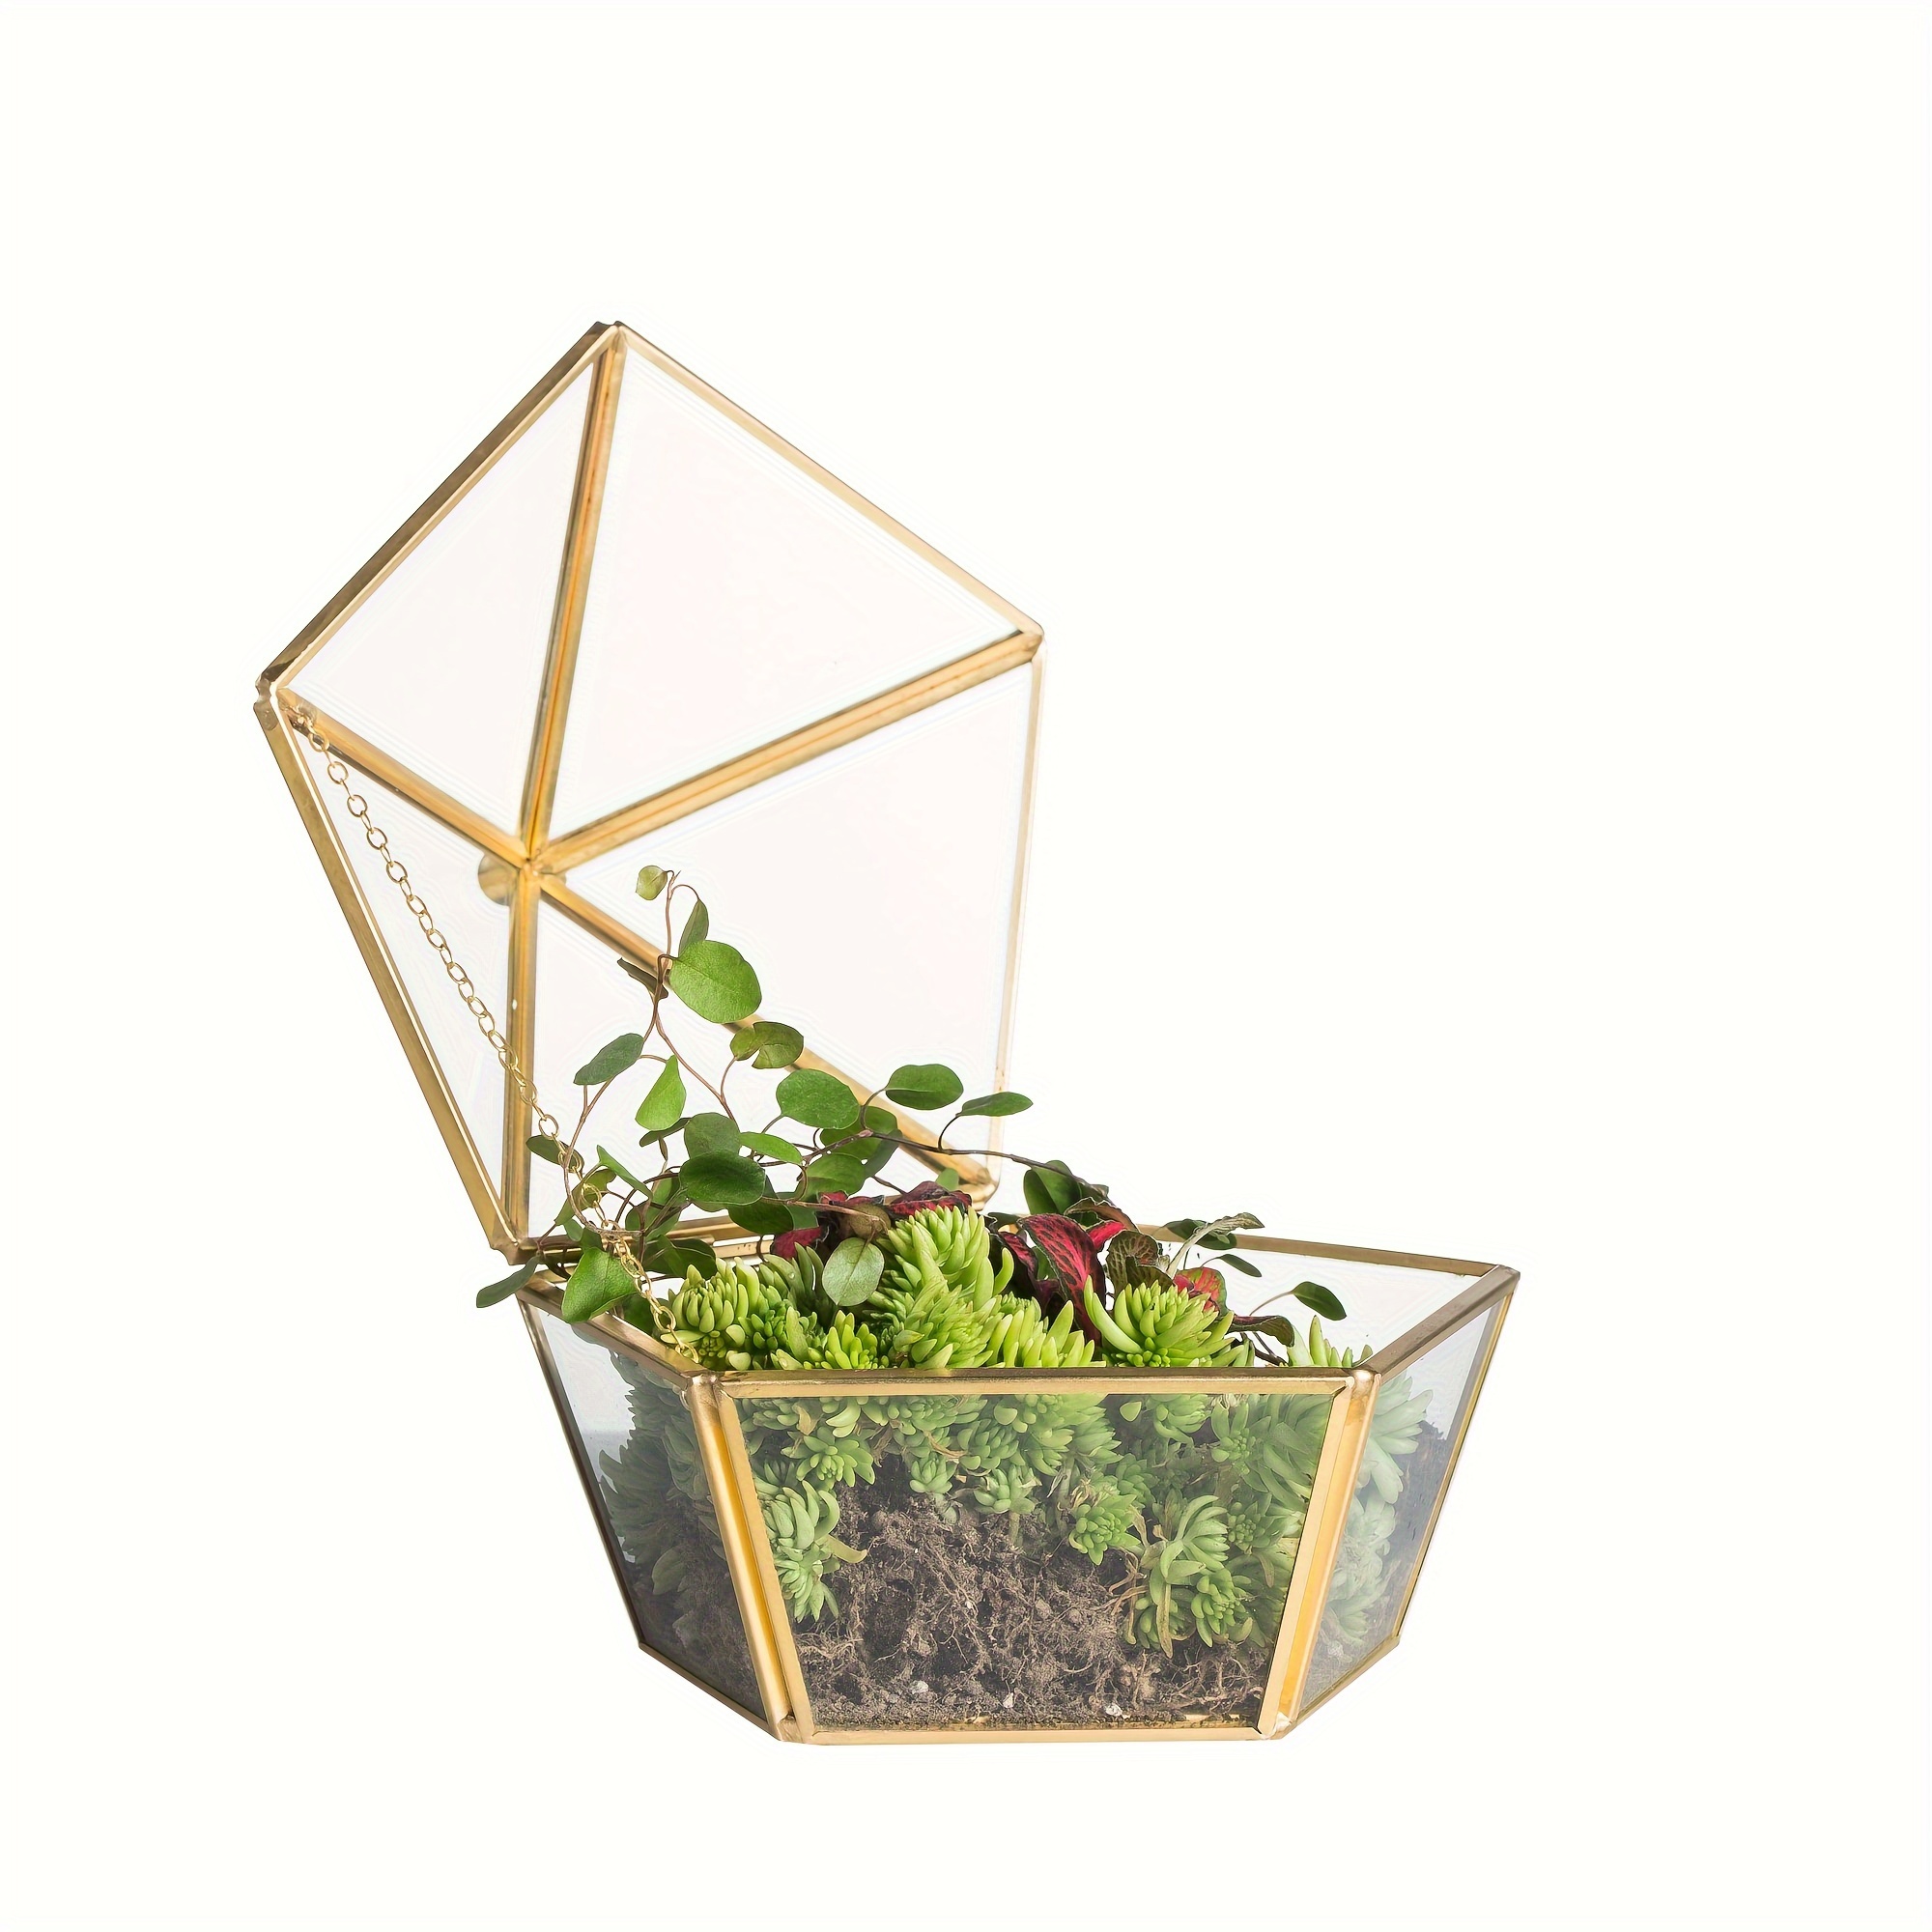 

1pc, Modern Pentagon Shape Closed Geometric Terrarium Planter Pot For Succulent Plant Moss Fern, Brass Clear Glass Jewelry Box, Wedding Decor Container With Swing Lid Golden (no Plants)